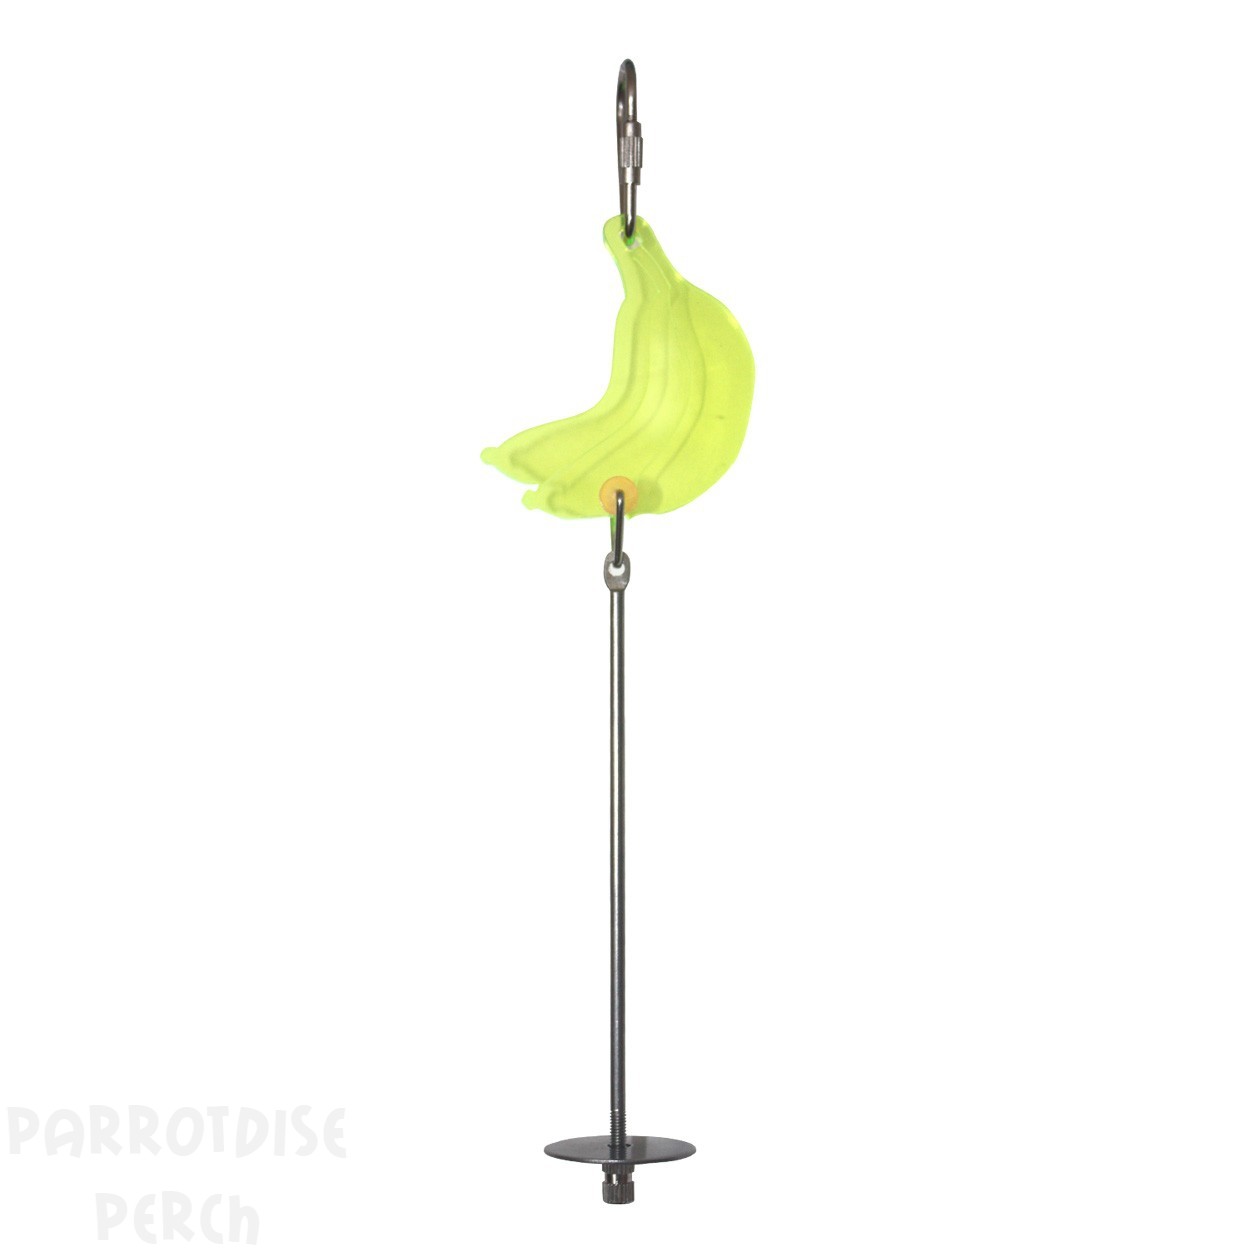 Banana Toy Skewer